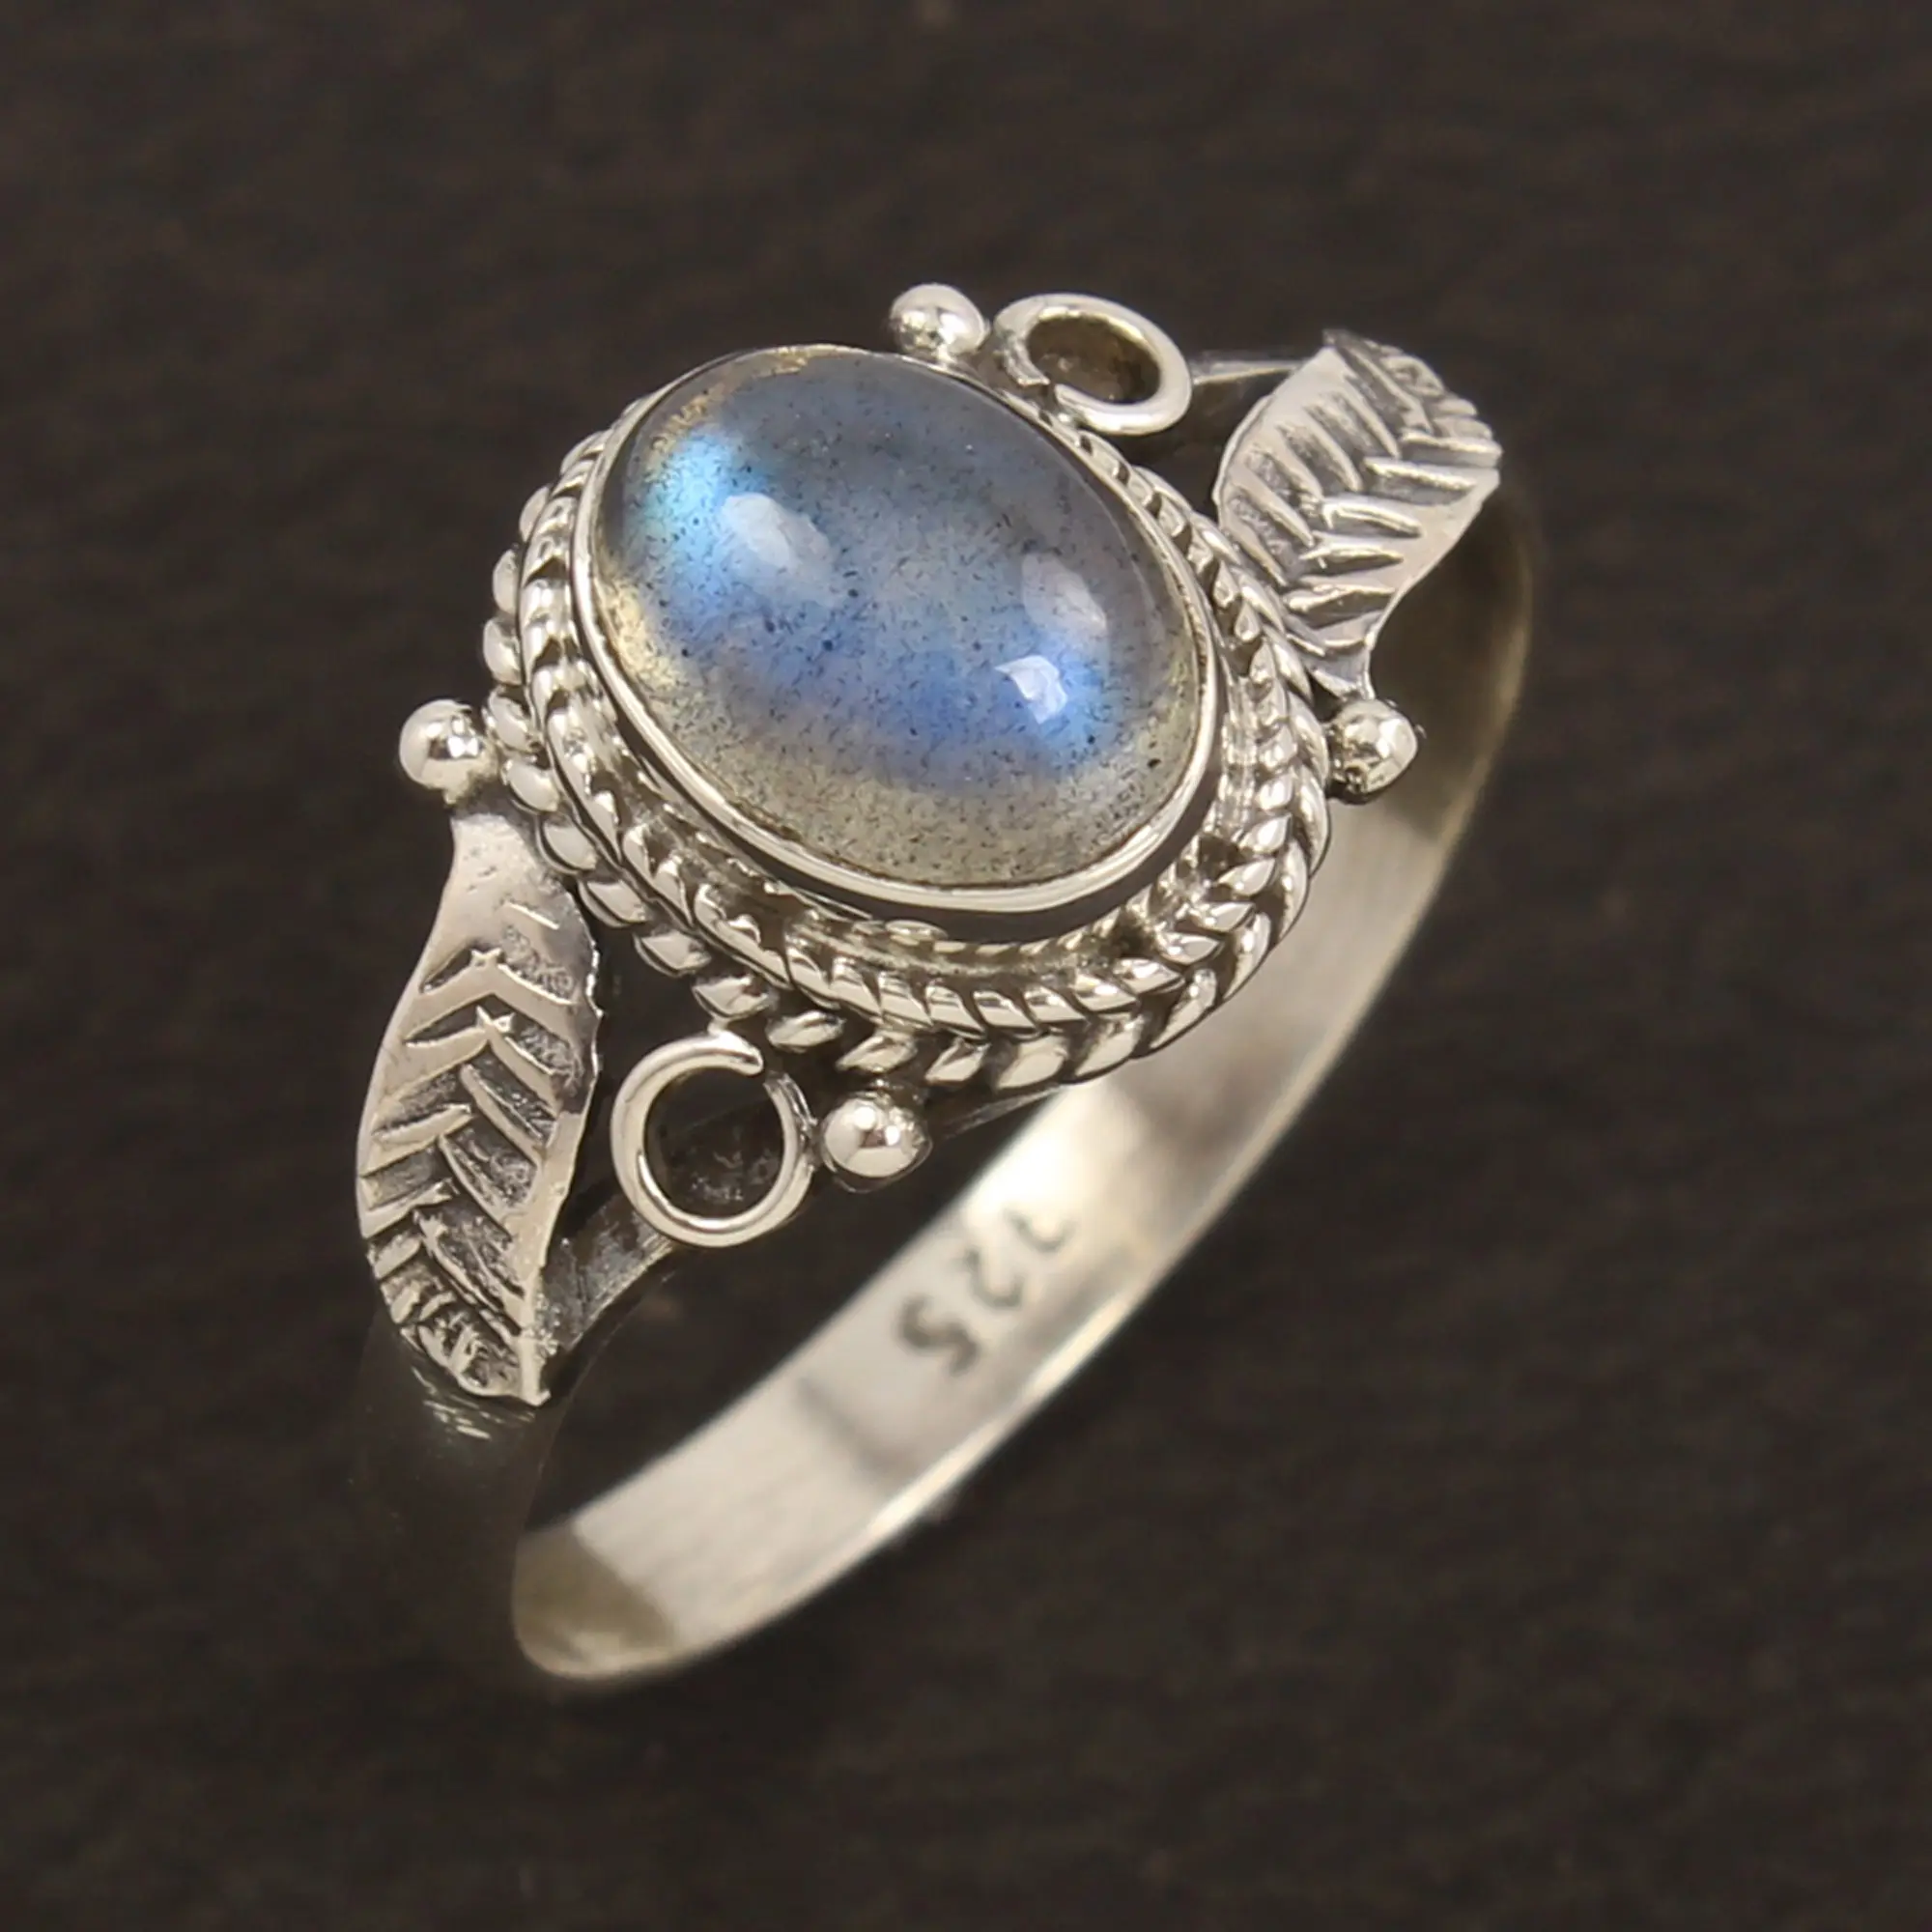 Bentuk Oval cincin LABRADORITE api biru langka cincin boho gaya 925 cincin perak murni padat dalam semua ukuran cincin desainer baru